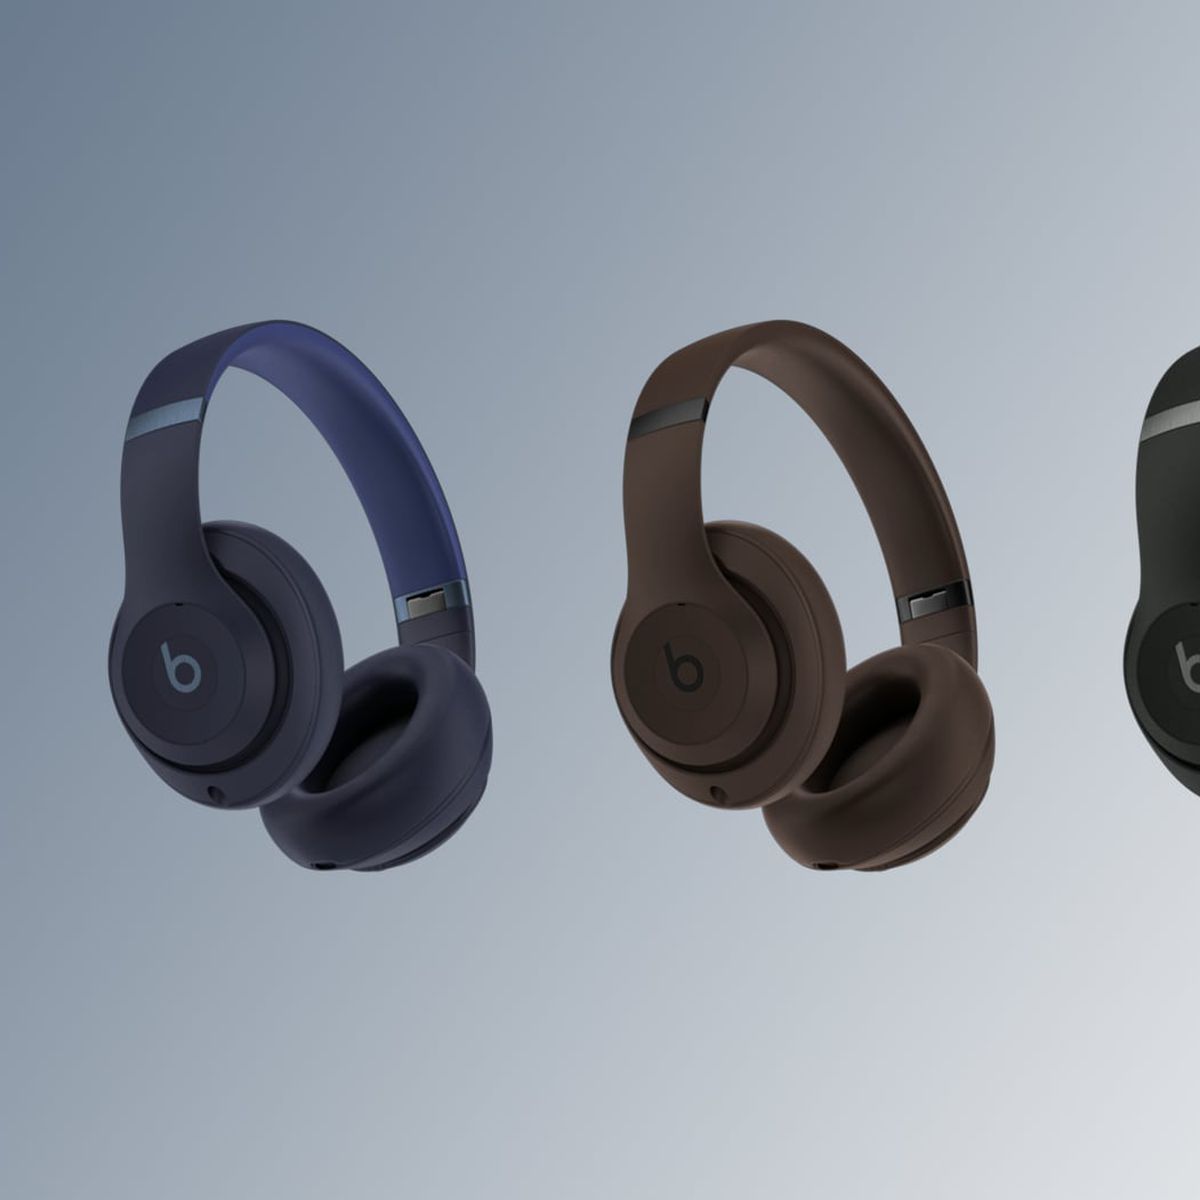 New Beats Studio Pro headphones found in latest iOS and macOS betas